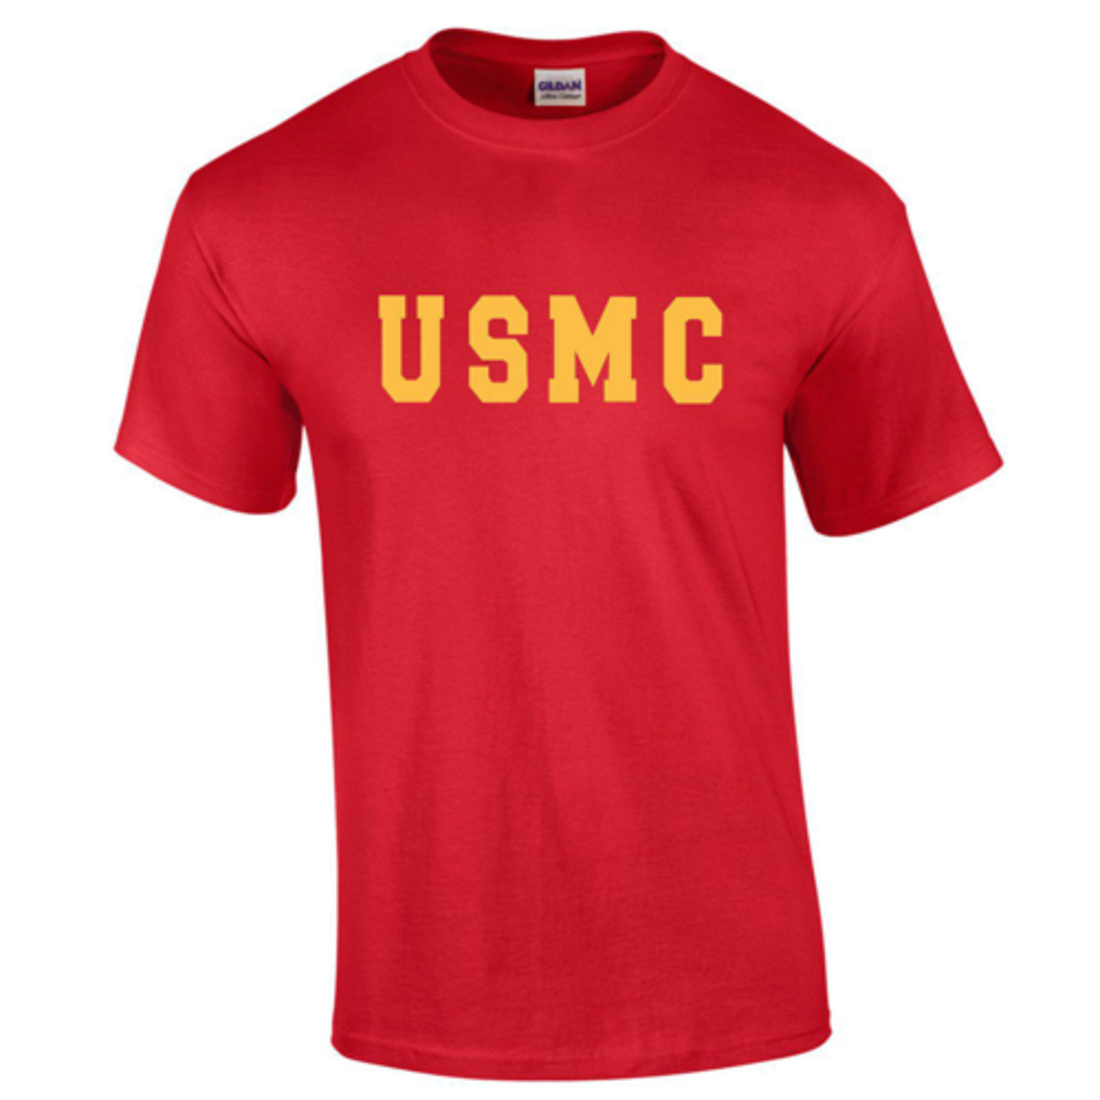 USMC Red T-Shirt - Free Shipping - Teamlogo.com | Custom Imprint and ...